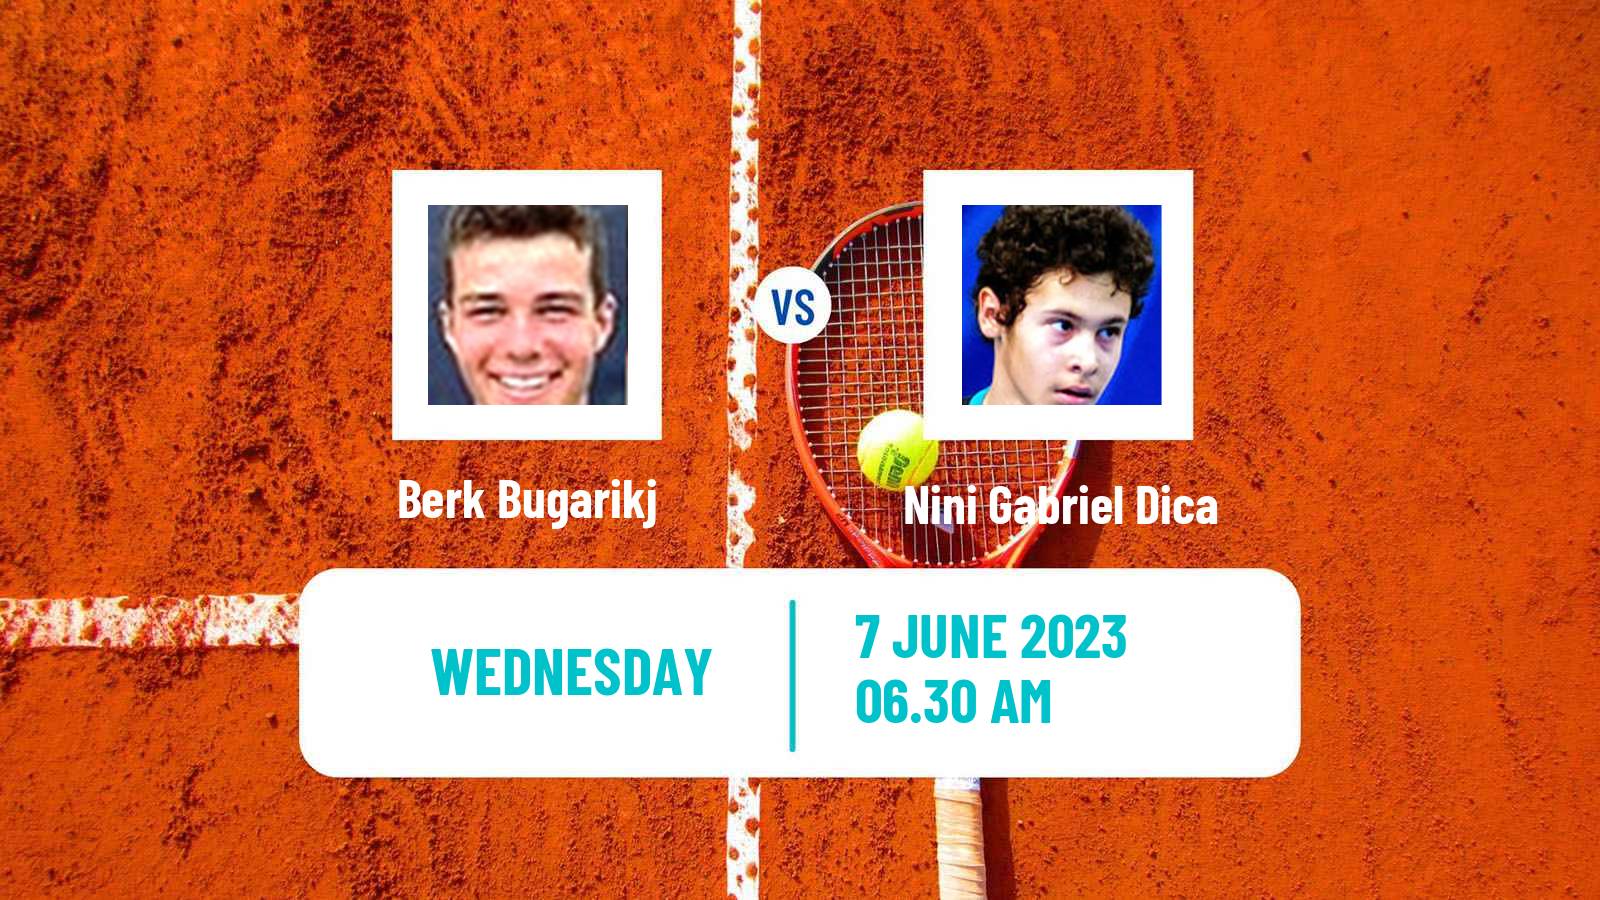 Tennis ITF M25 Skopje Men Berk Bugarikj - Nini Gabriel Dica